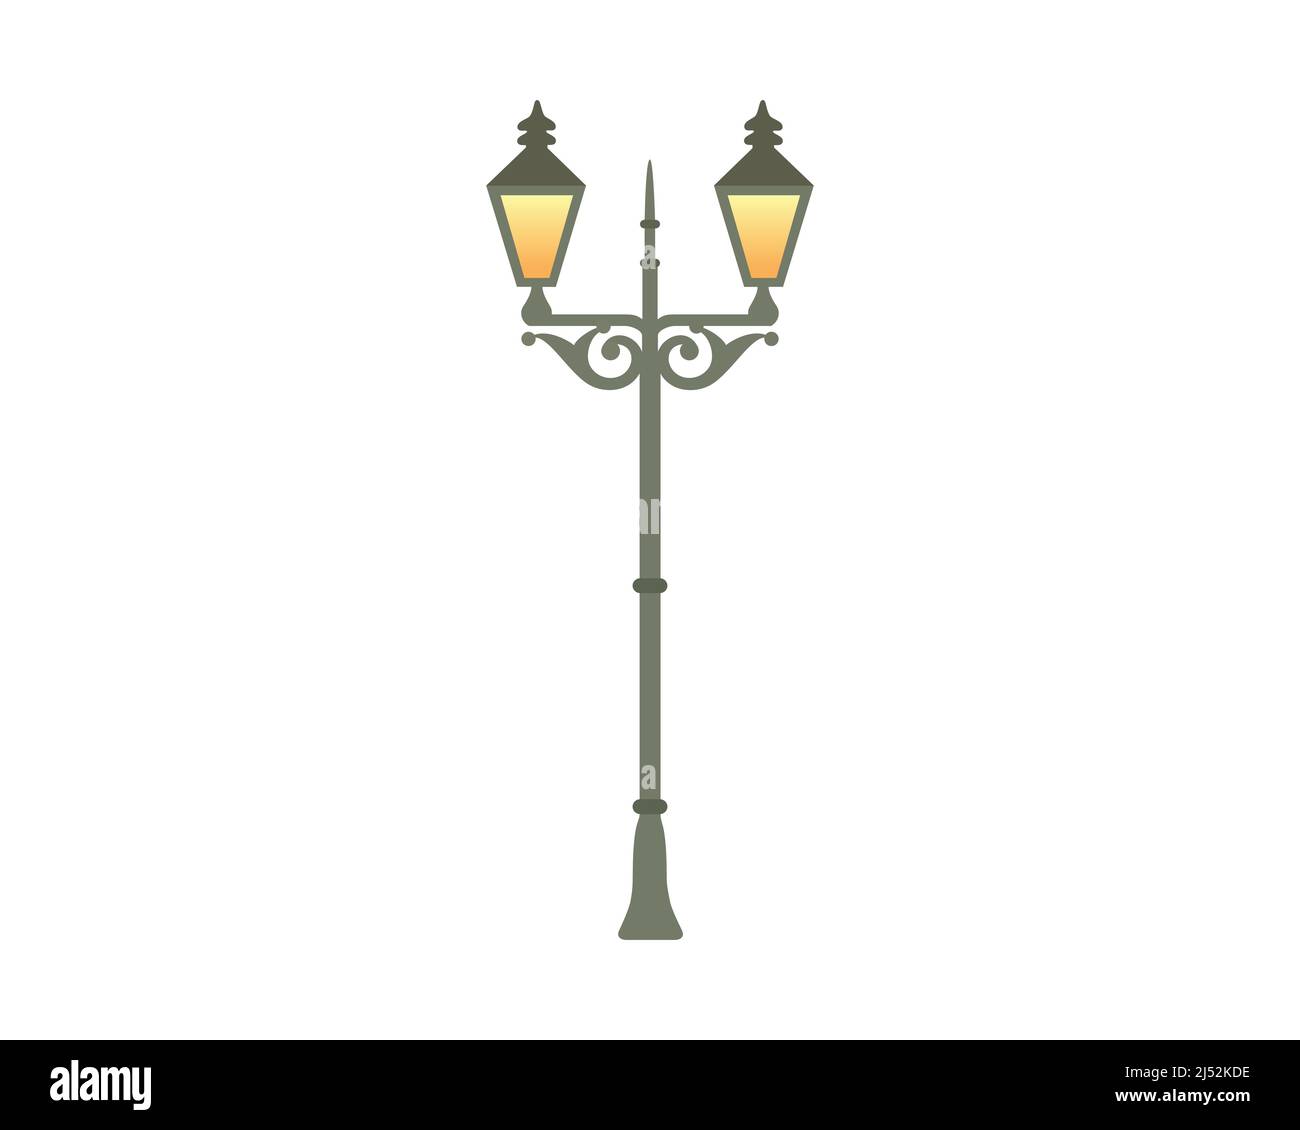 Victorian Street Light and Victorian Street Lamp Illustration Stock Vector